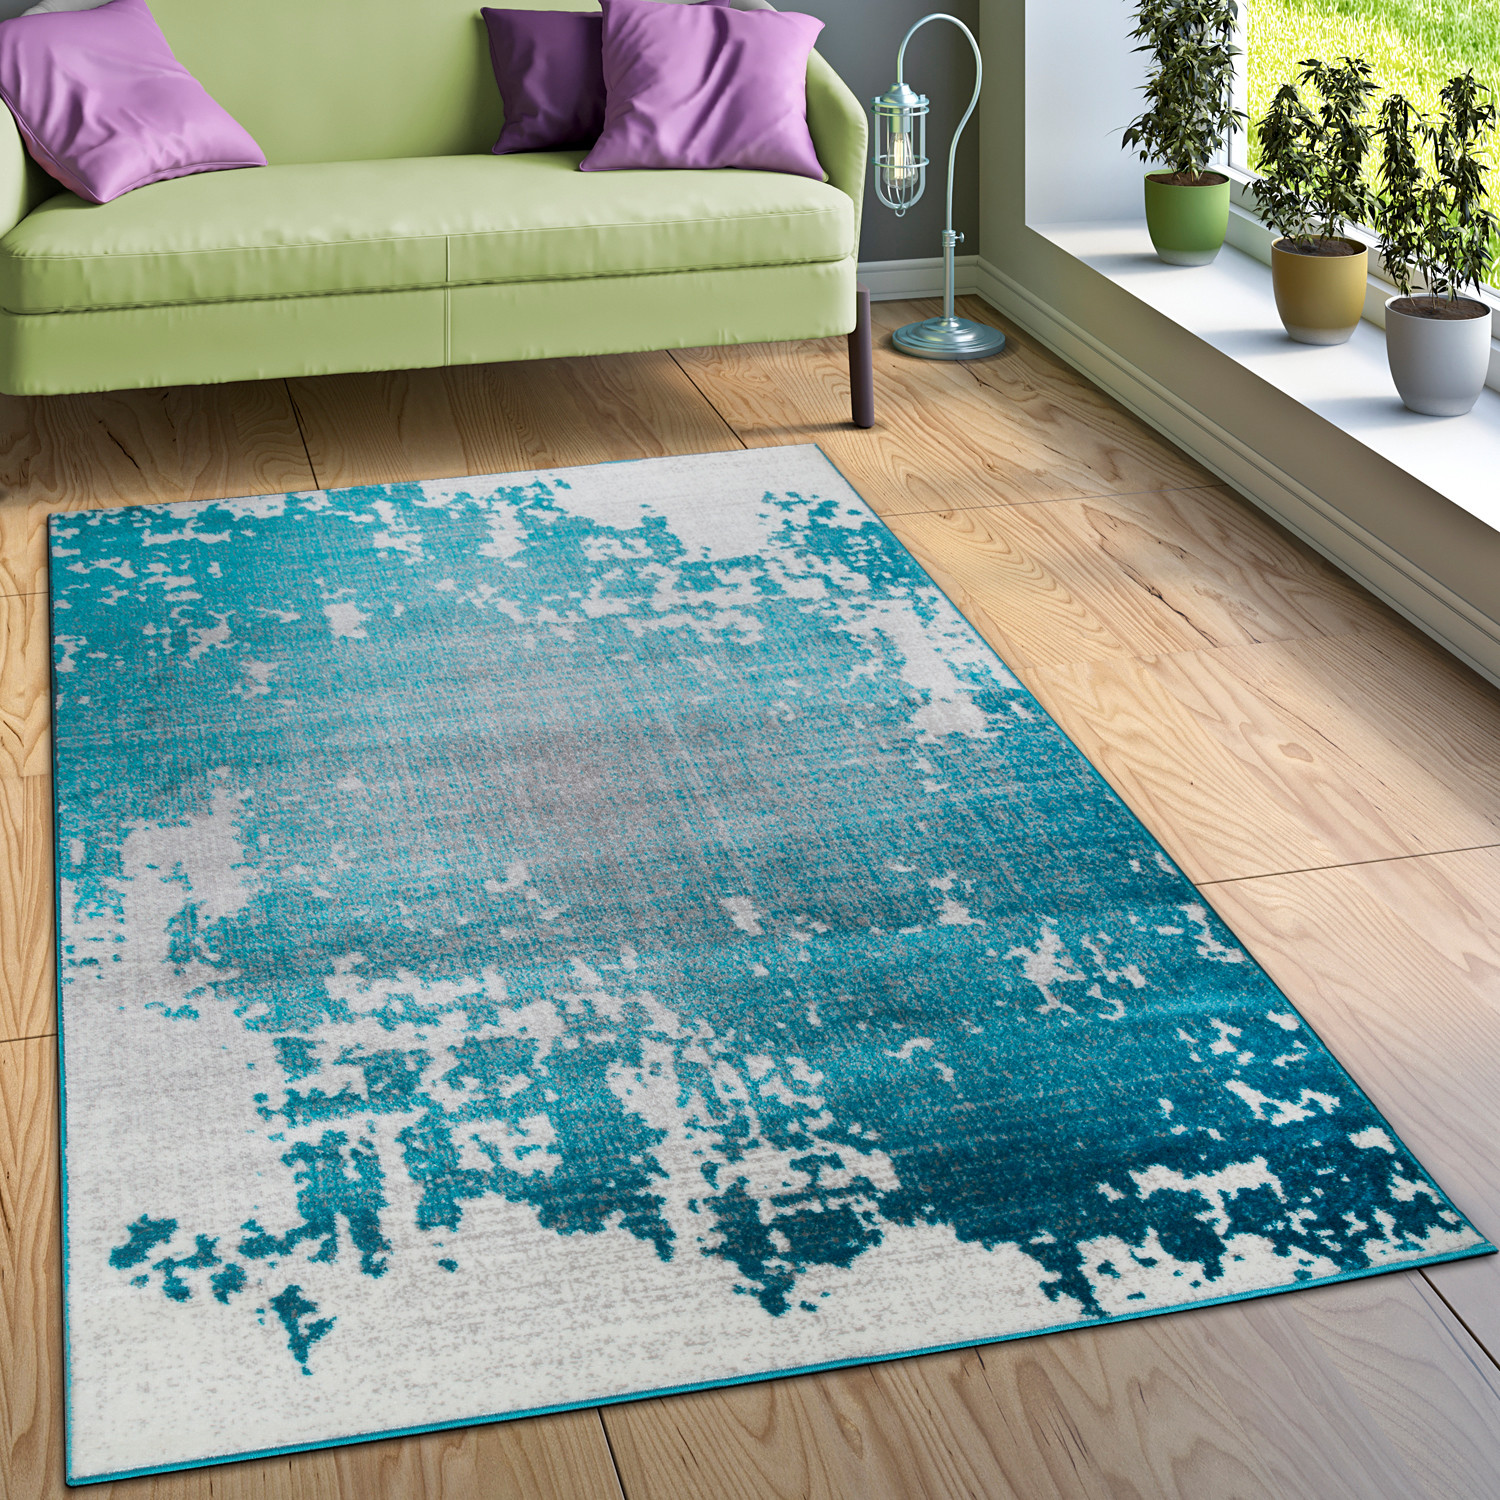 Turquoise Rug Living Room
 Designer Rug Splash Pattern Turquoise